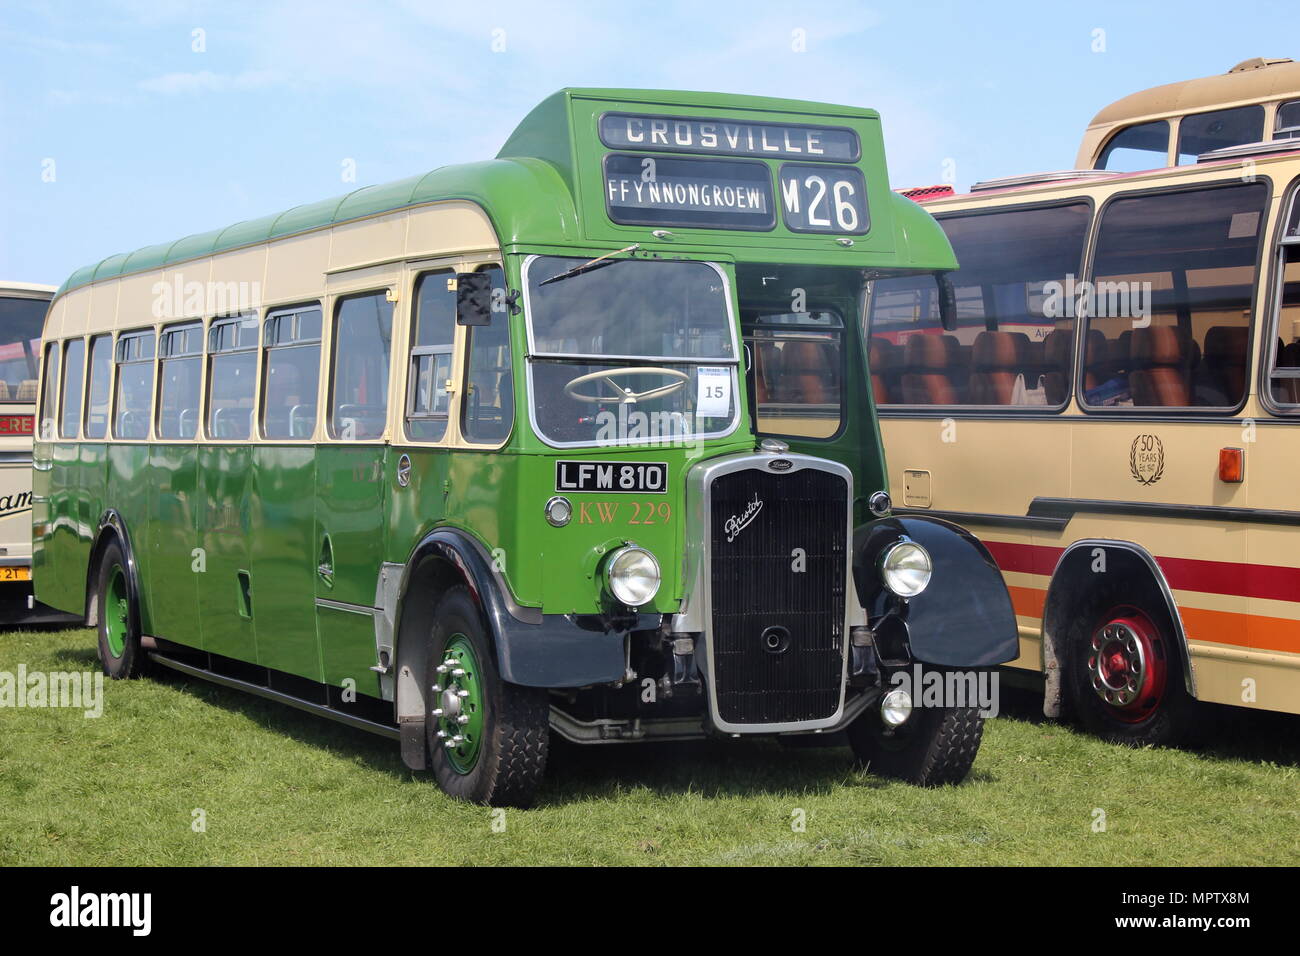 Vintage Bus Show Llandudno Wales Stock Photo